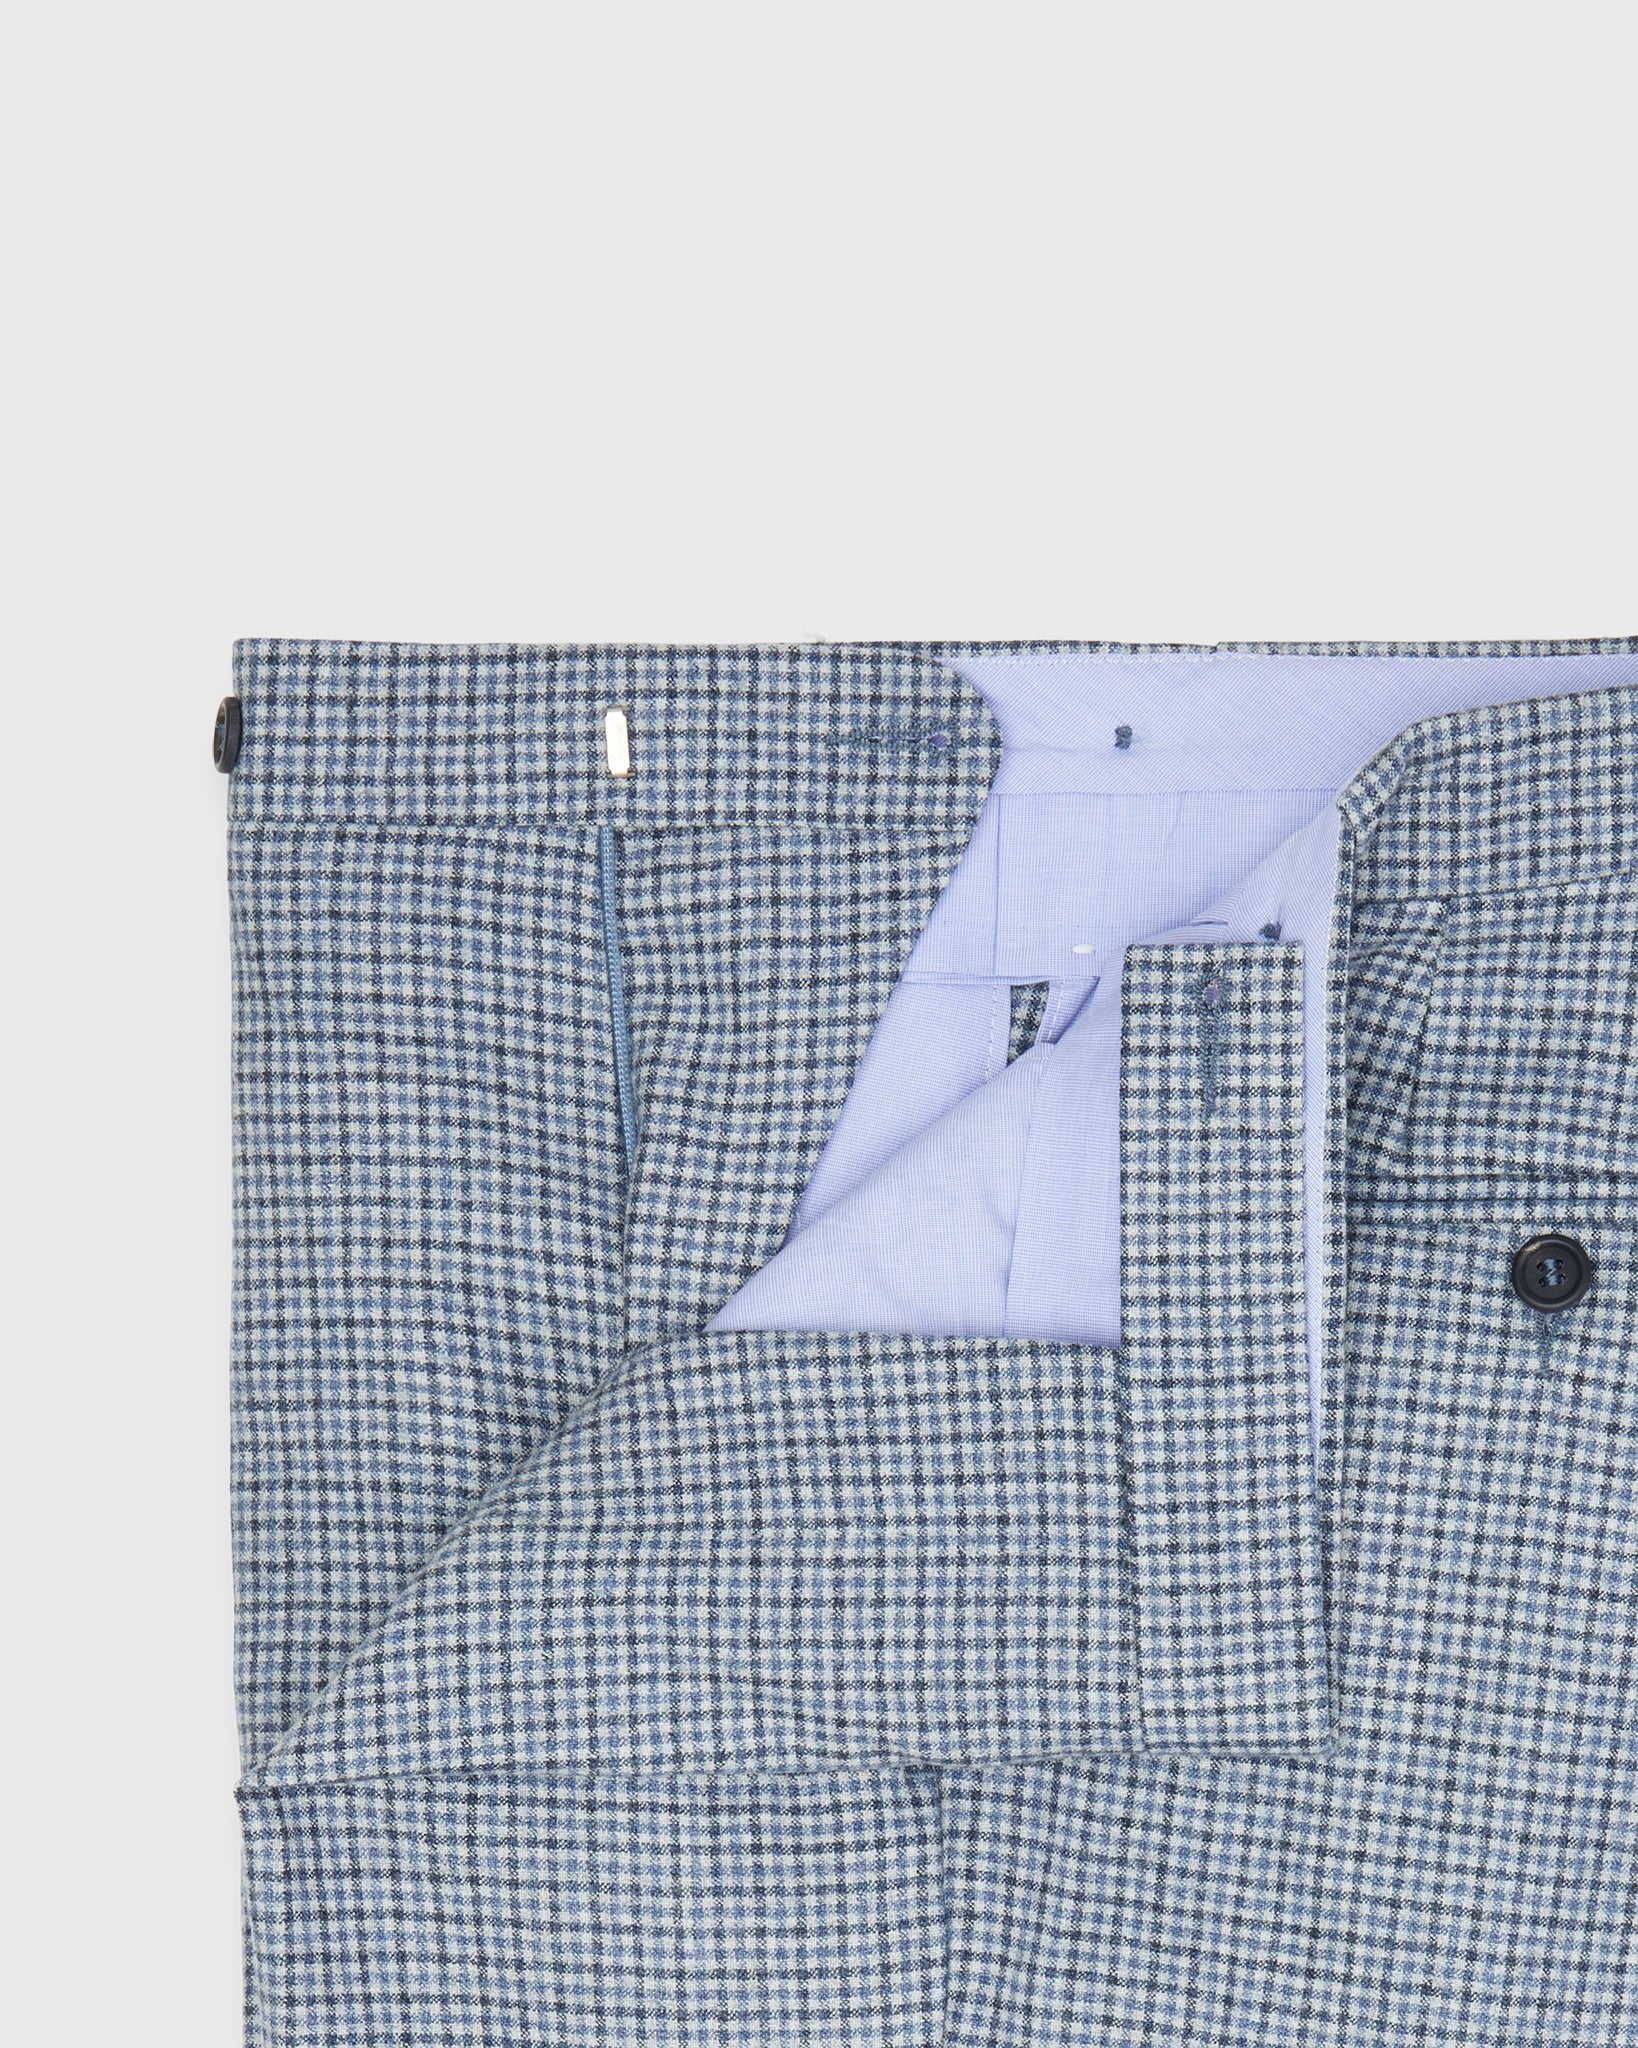 Side-Tab Dress Trouser in Fog/Navy/Blue Check Brushed Hopsack